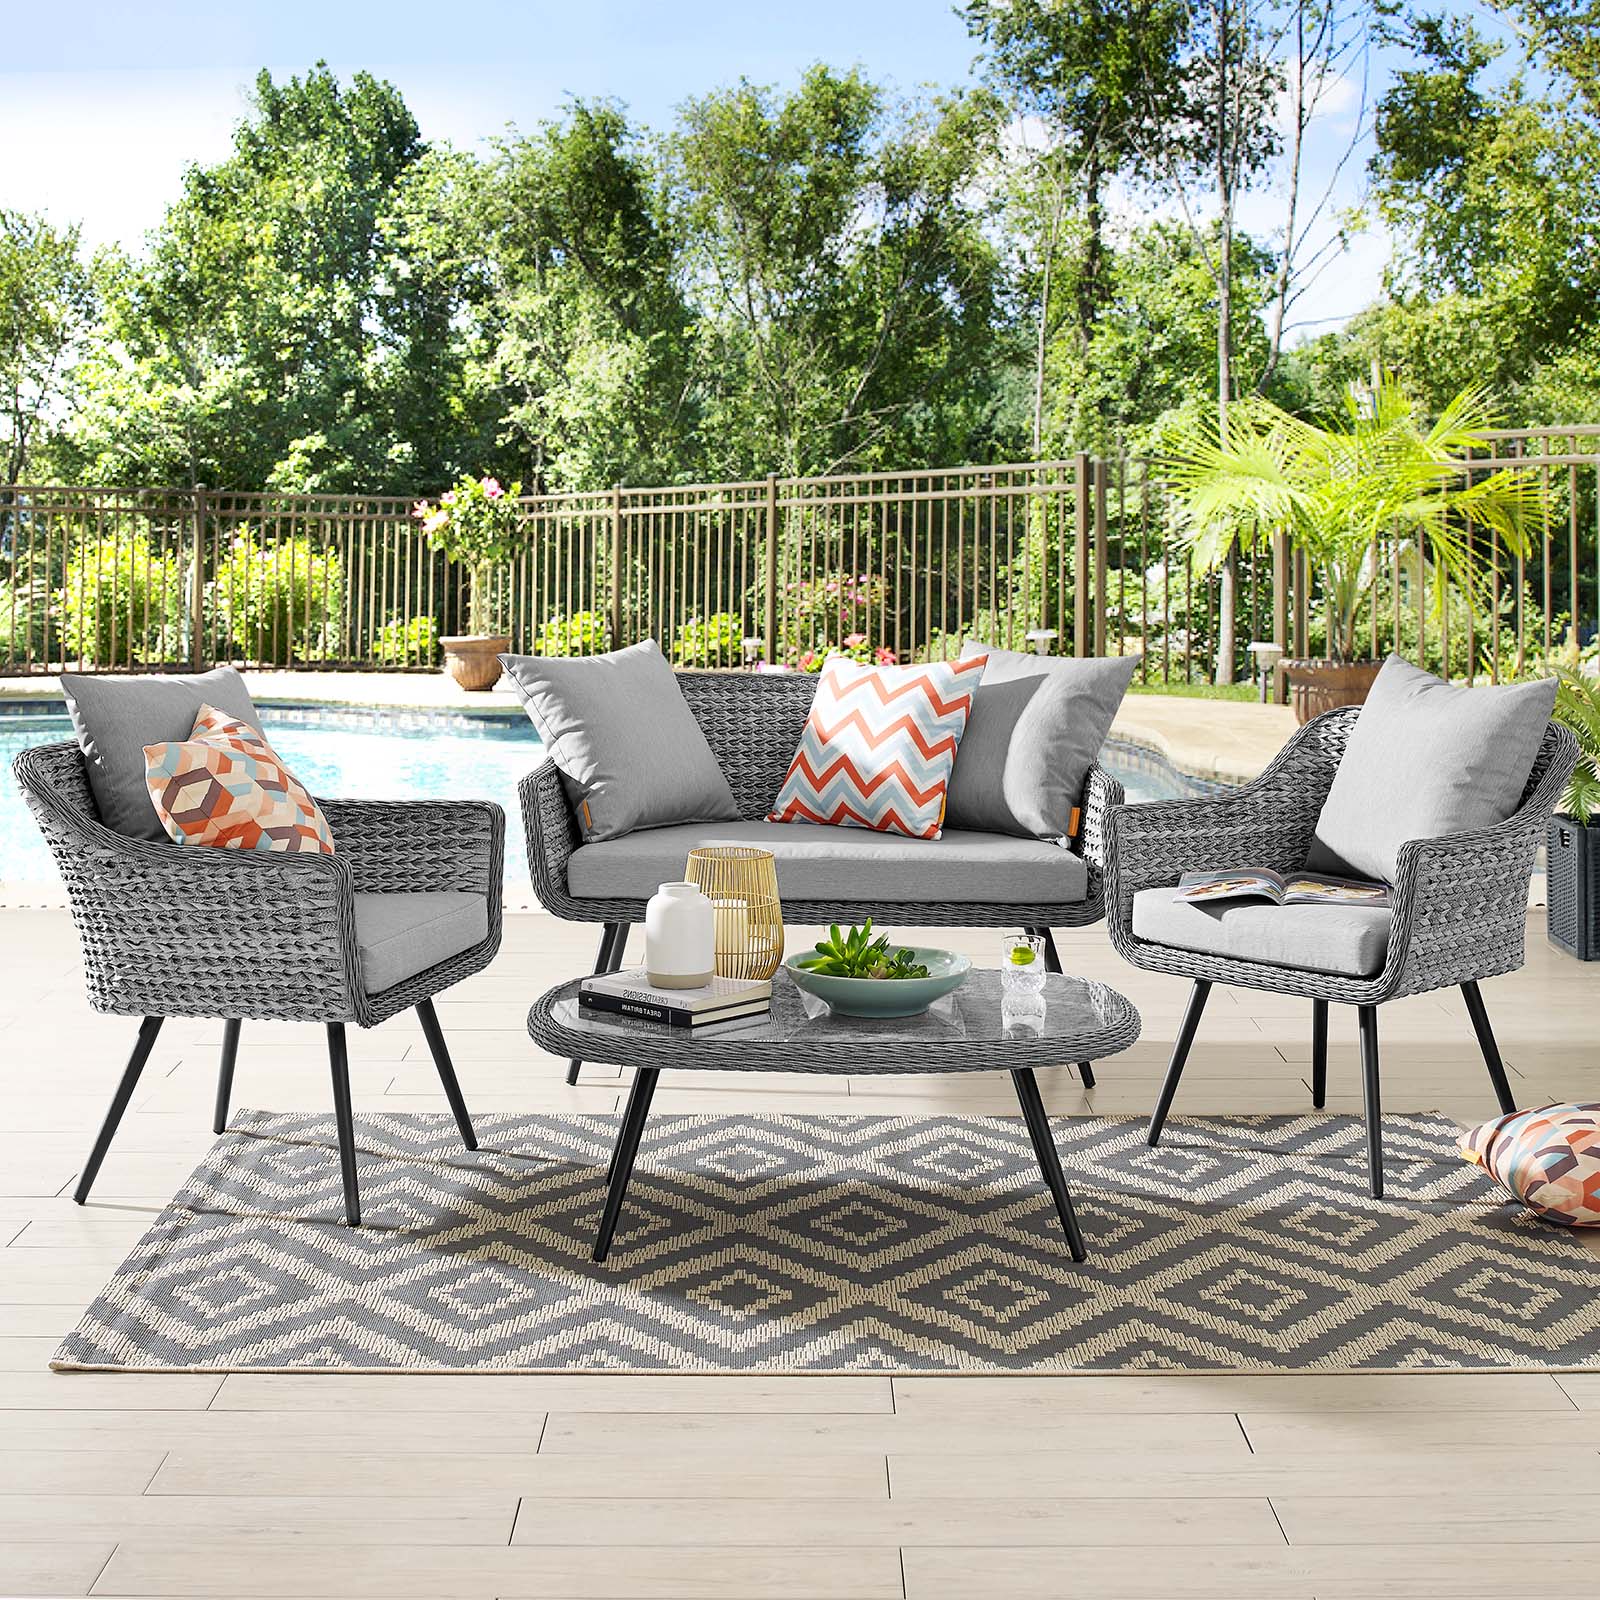 Contemporary Modern Urban Designer Outdoor Patio Balcony Garden Furniture Lounge Sofa, Chair and Coffee Table Set, Aluminum Fabric Wicker Rattan, Grey Gray - image 3 of 9